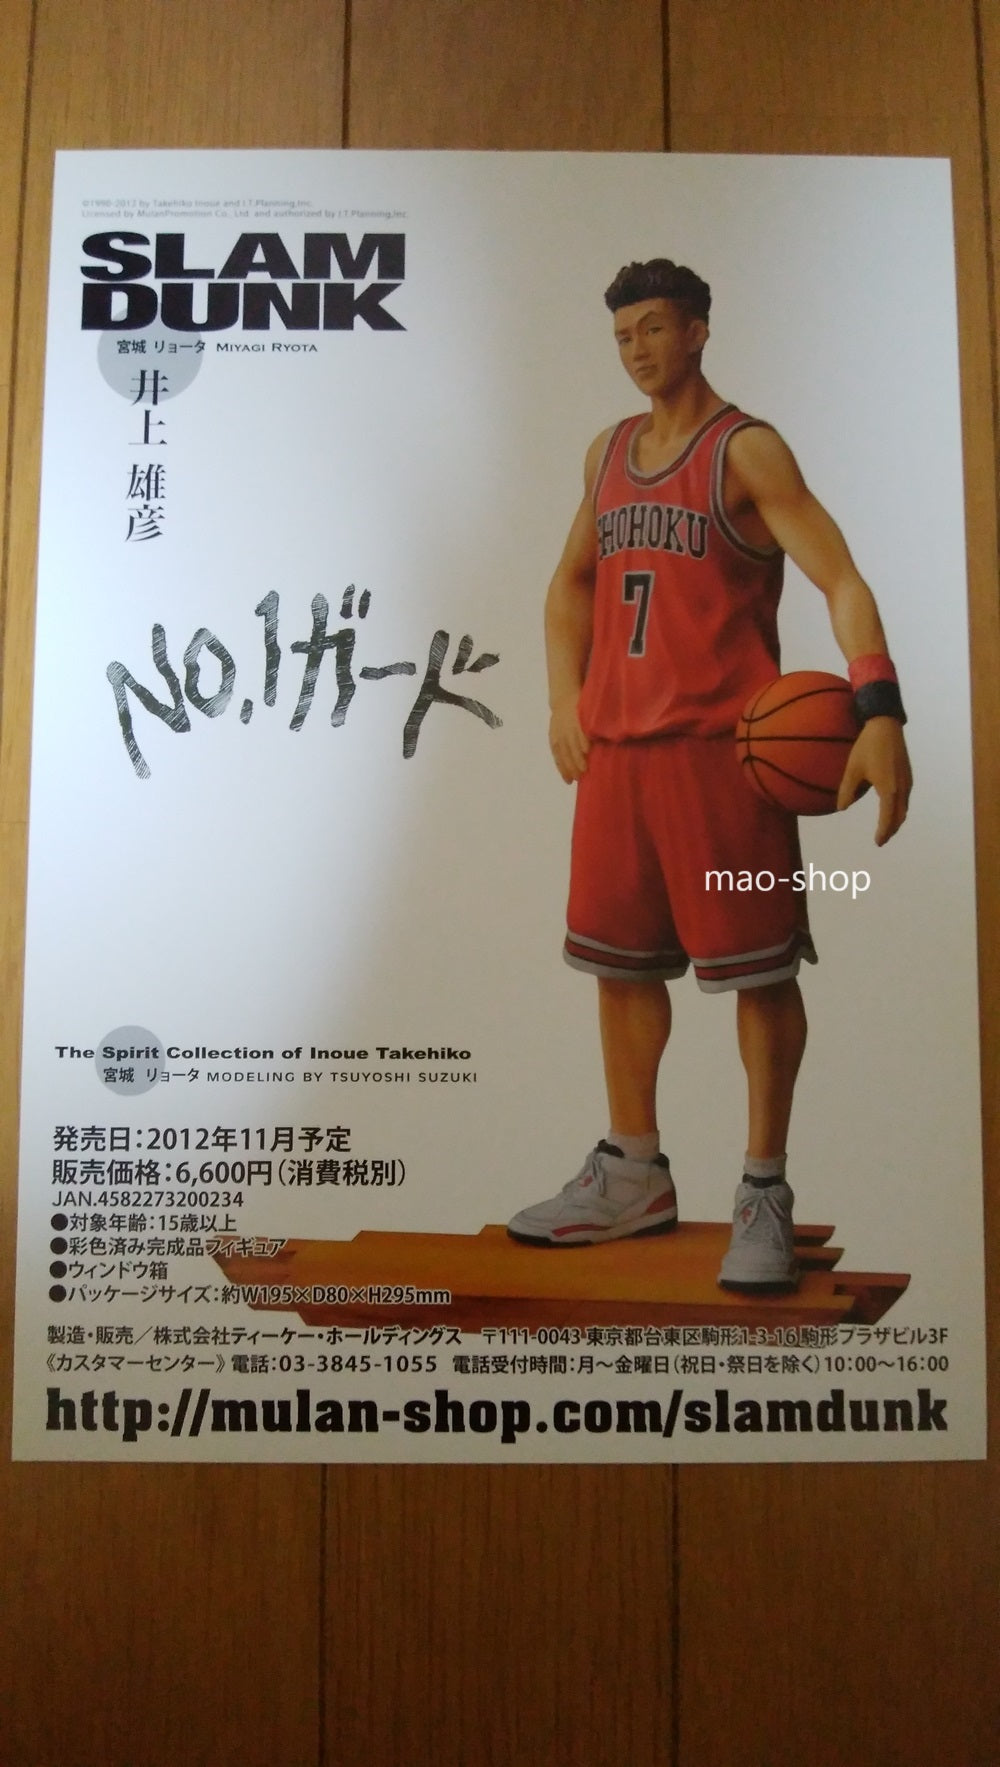 SLAM DUNK Ryota Miyagi figure flyer